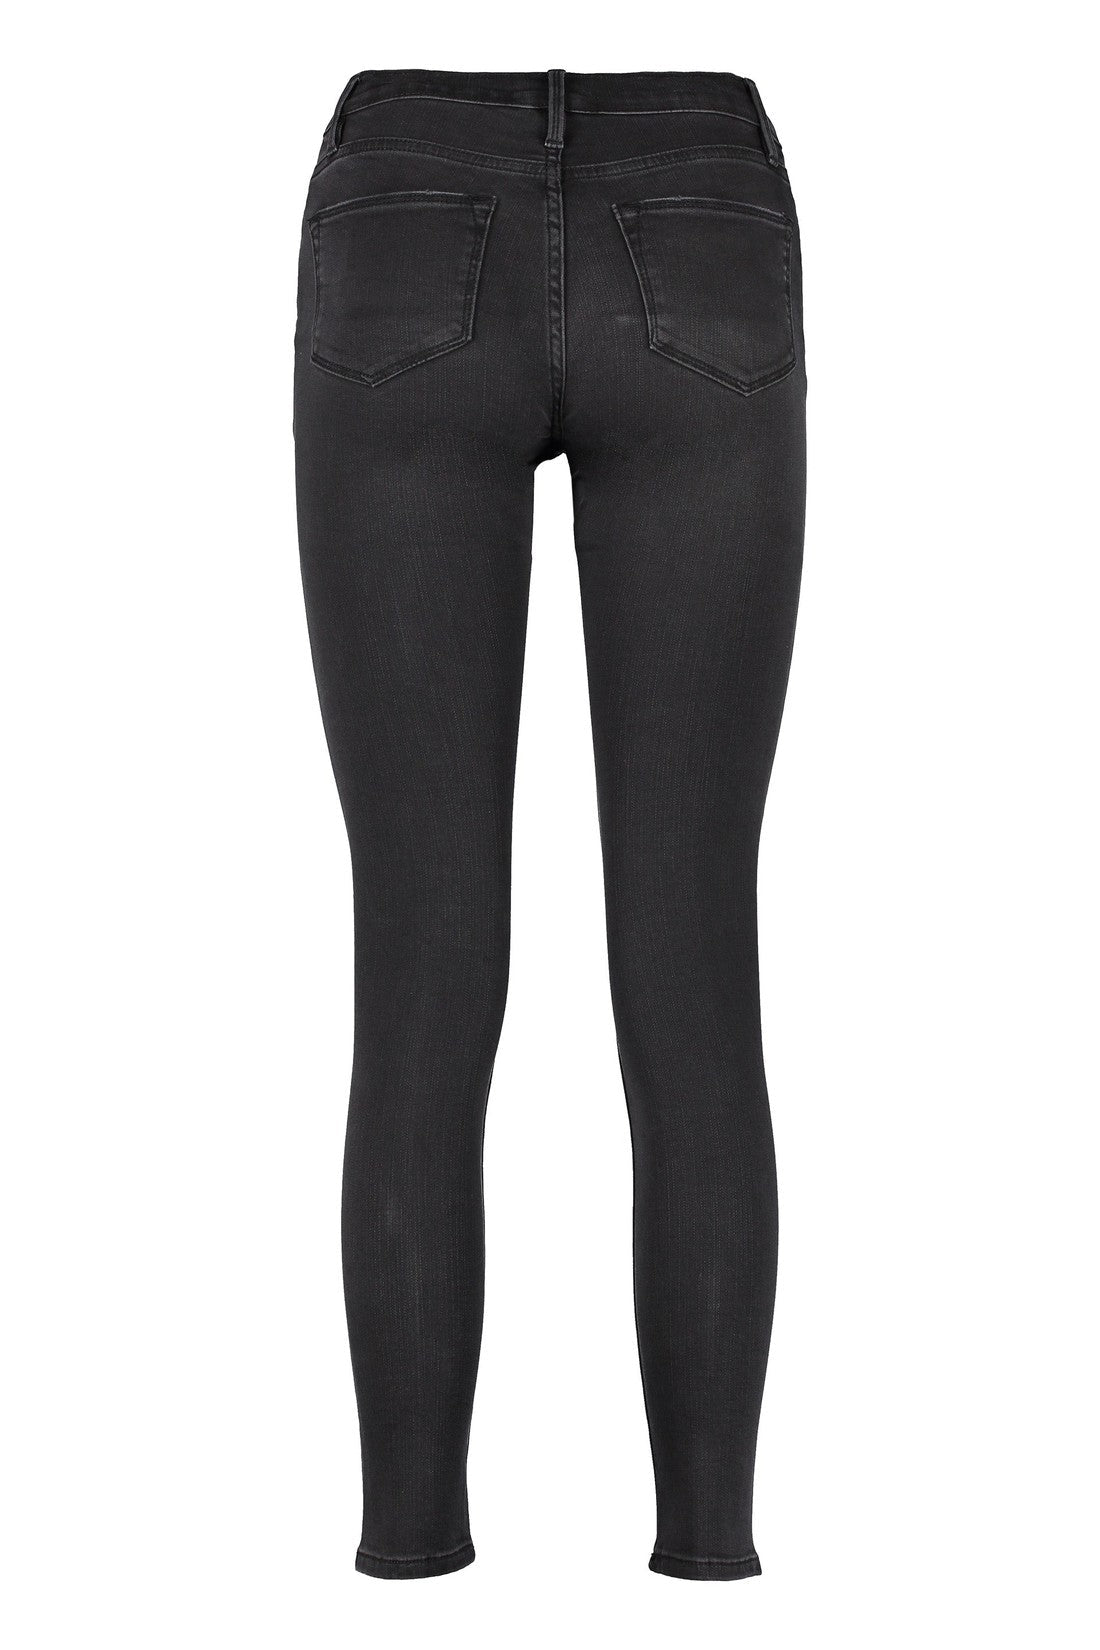 Frame-OUTLET-SALE-Le High Skinny jeans-ARCHIVIST